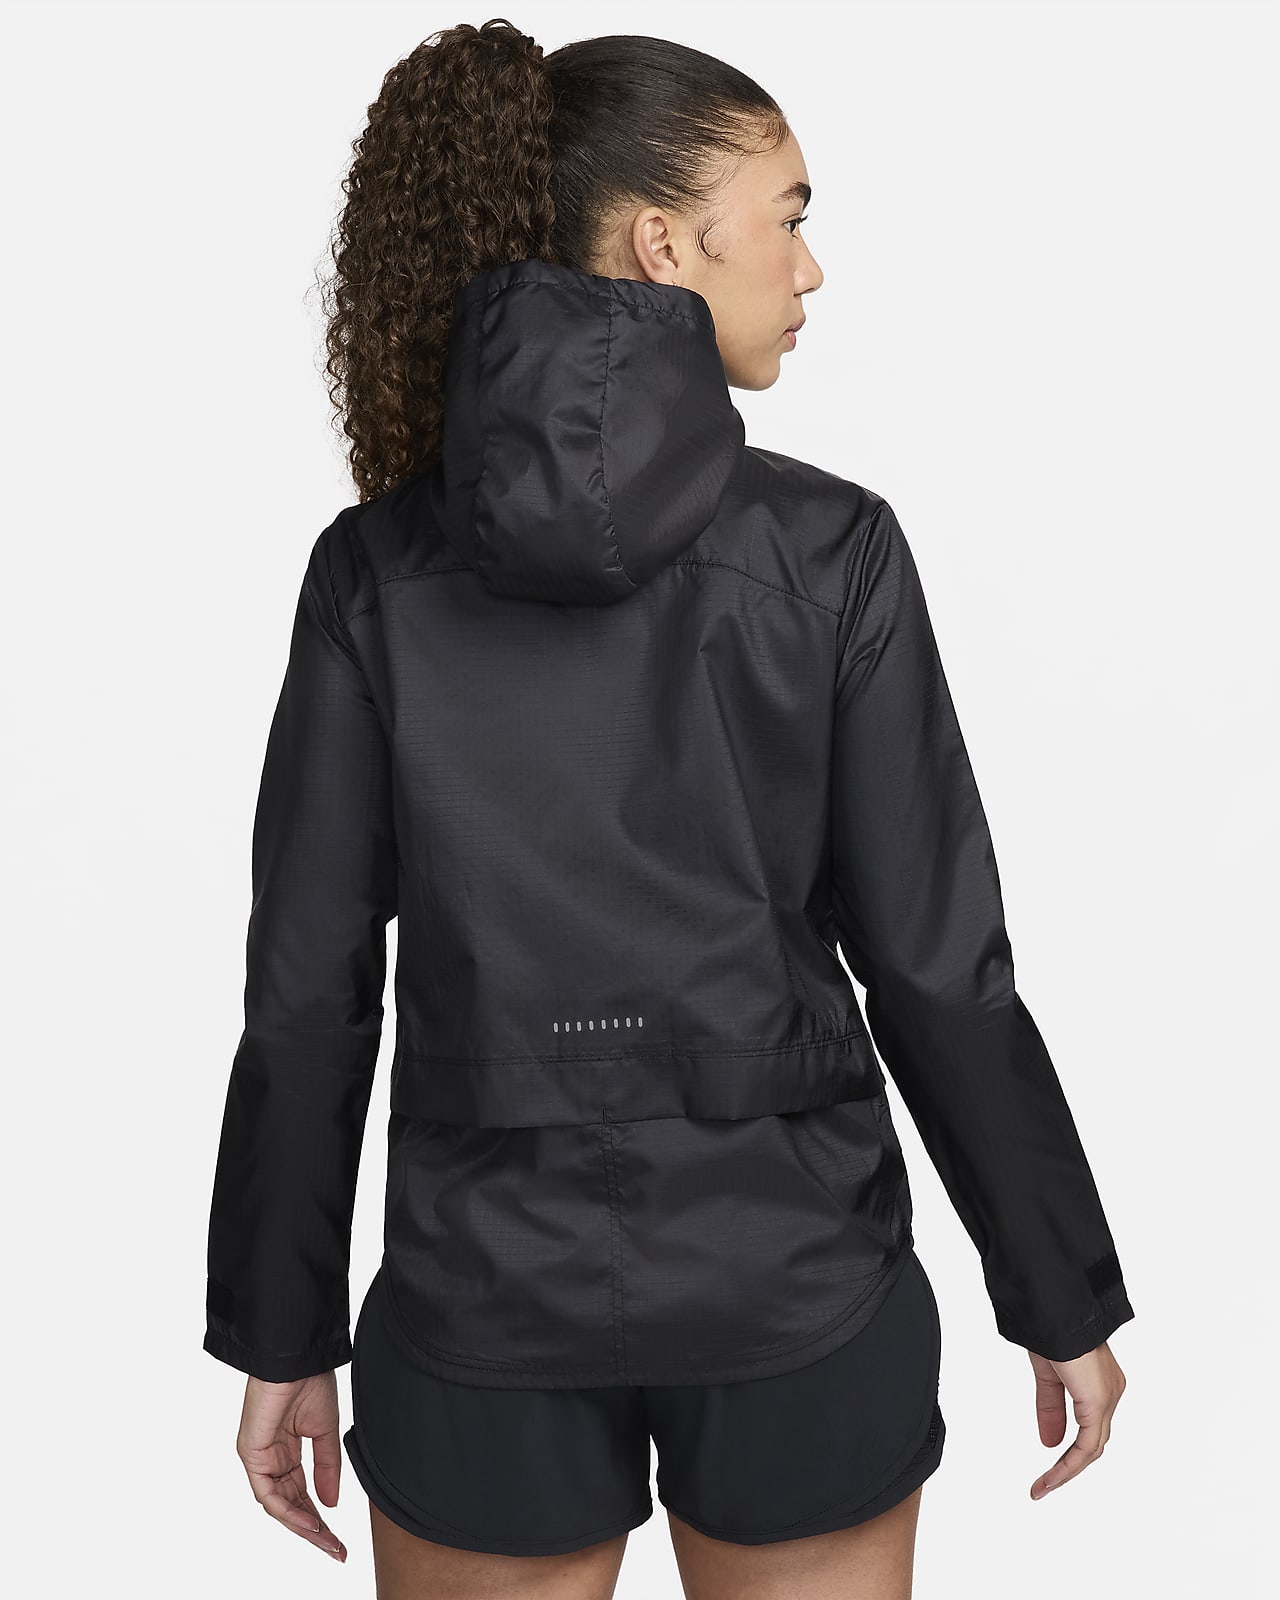 Nike Women\'s Running Jacket. Essential